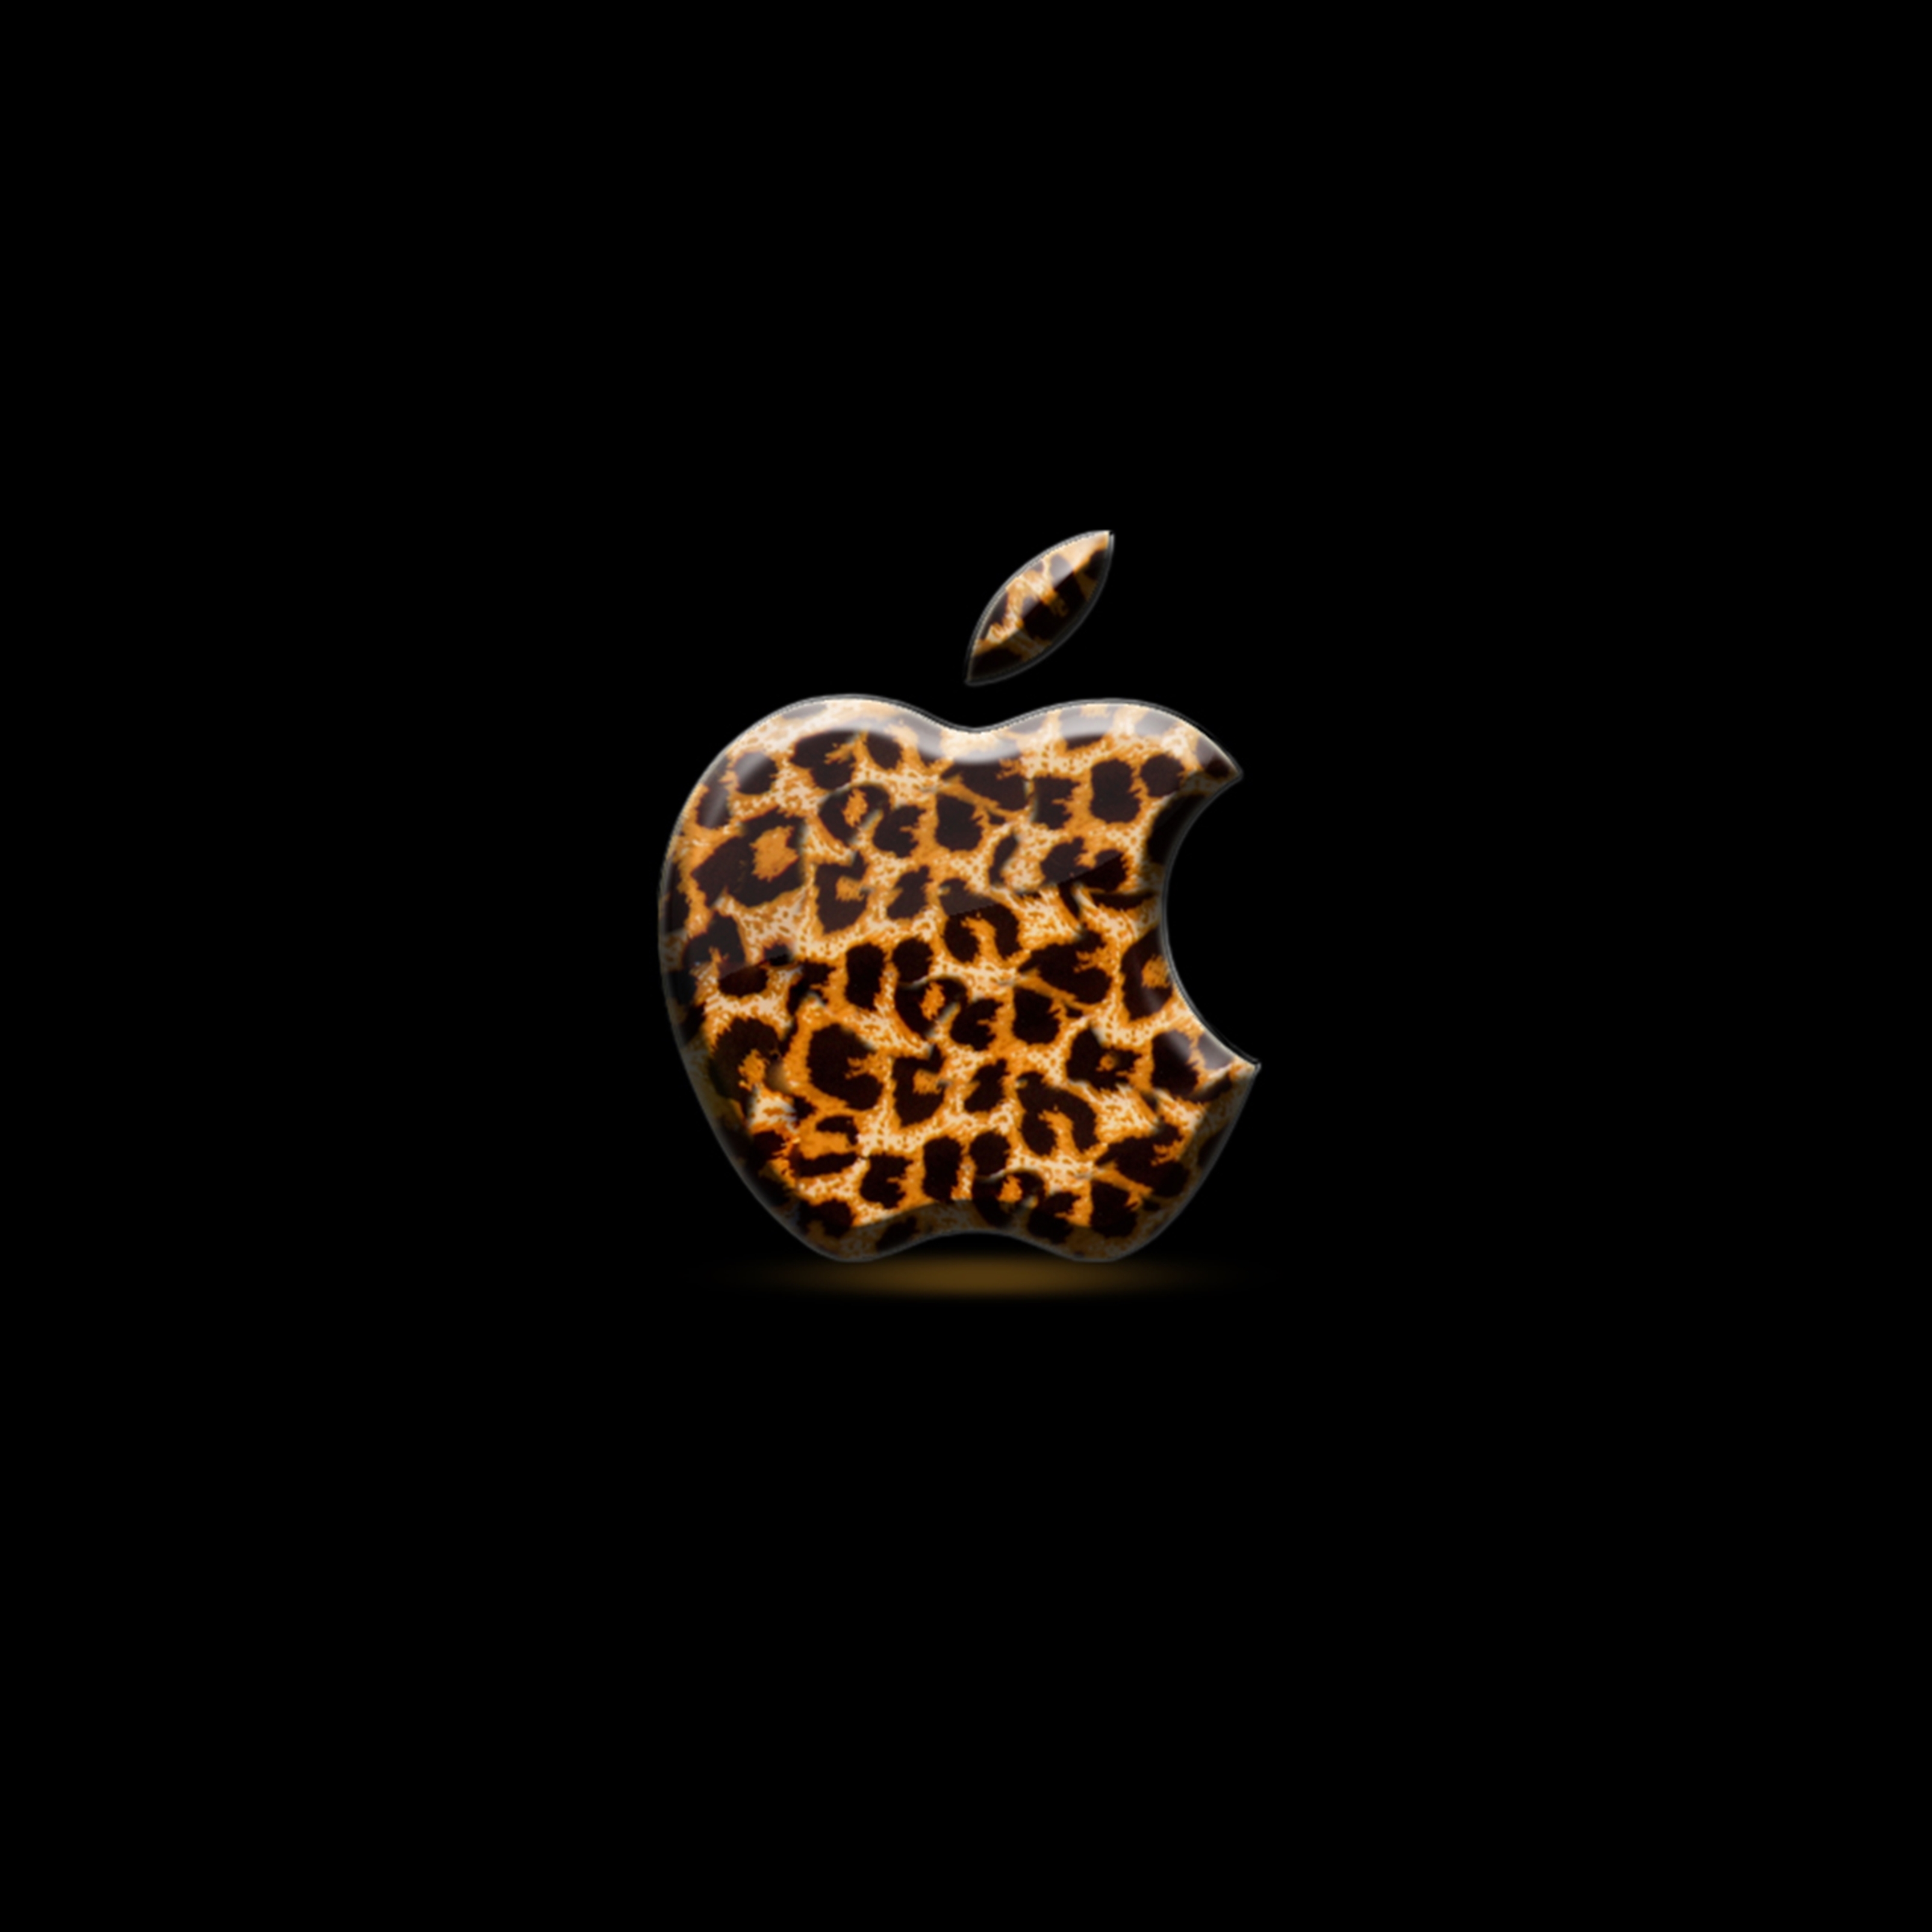 Apple Leopard Ipad Wallpaper